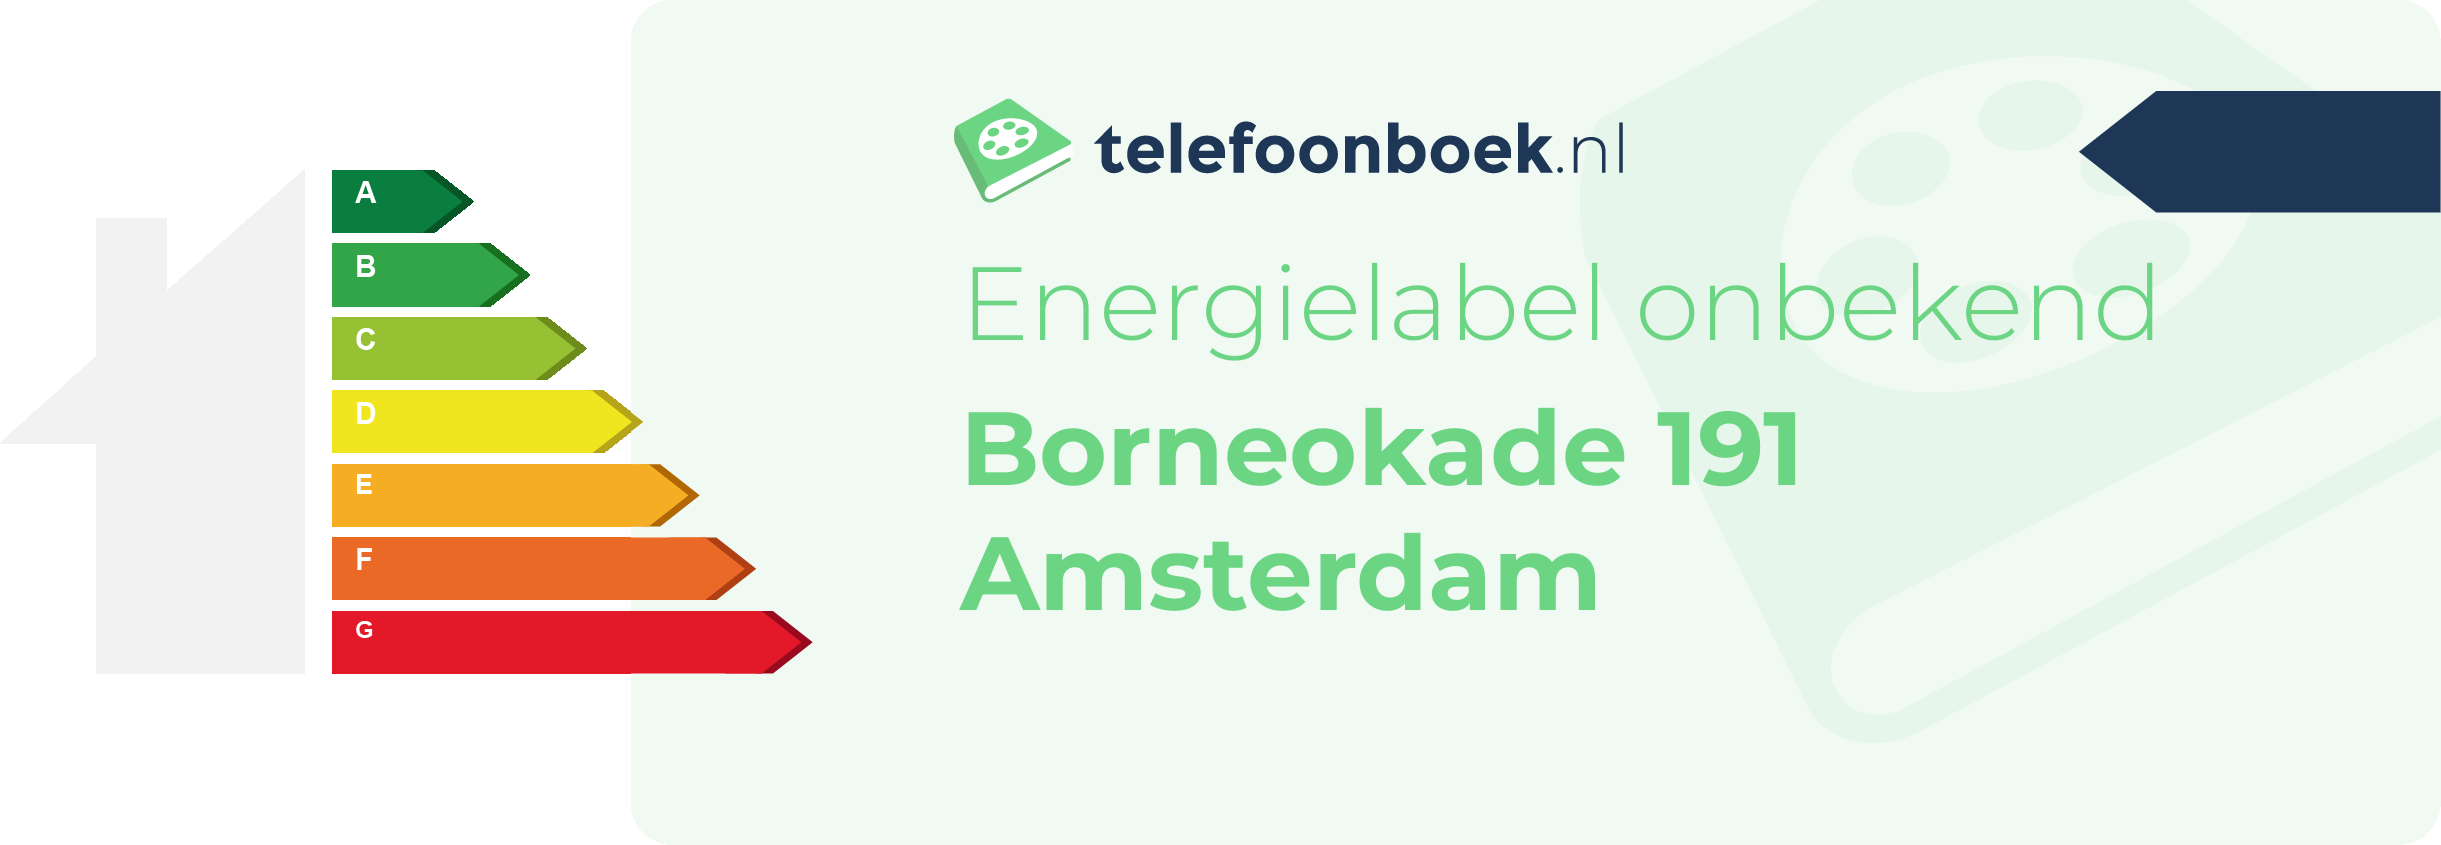 Energielabel Borneokade 191 Amsterdam